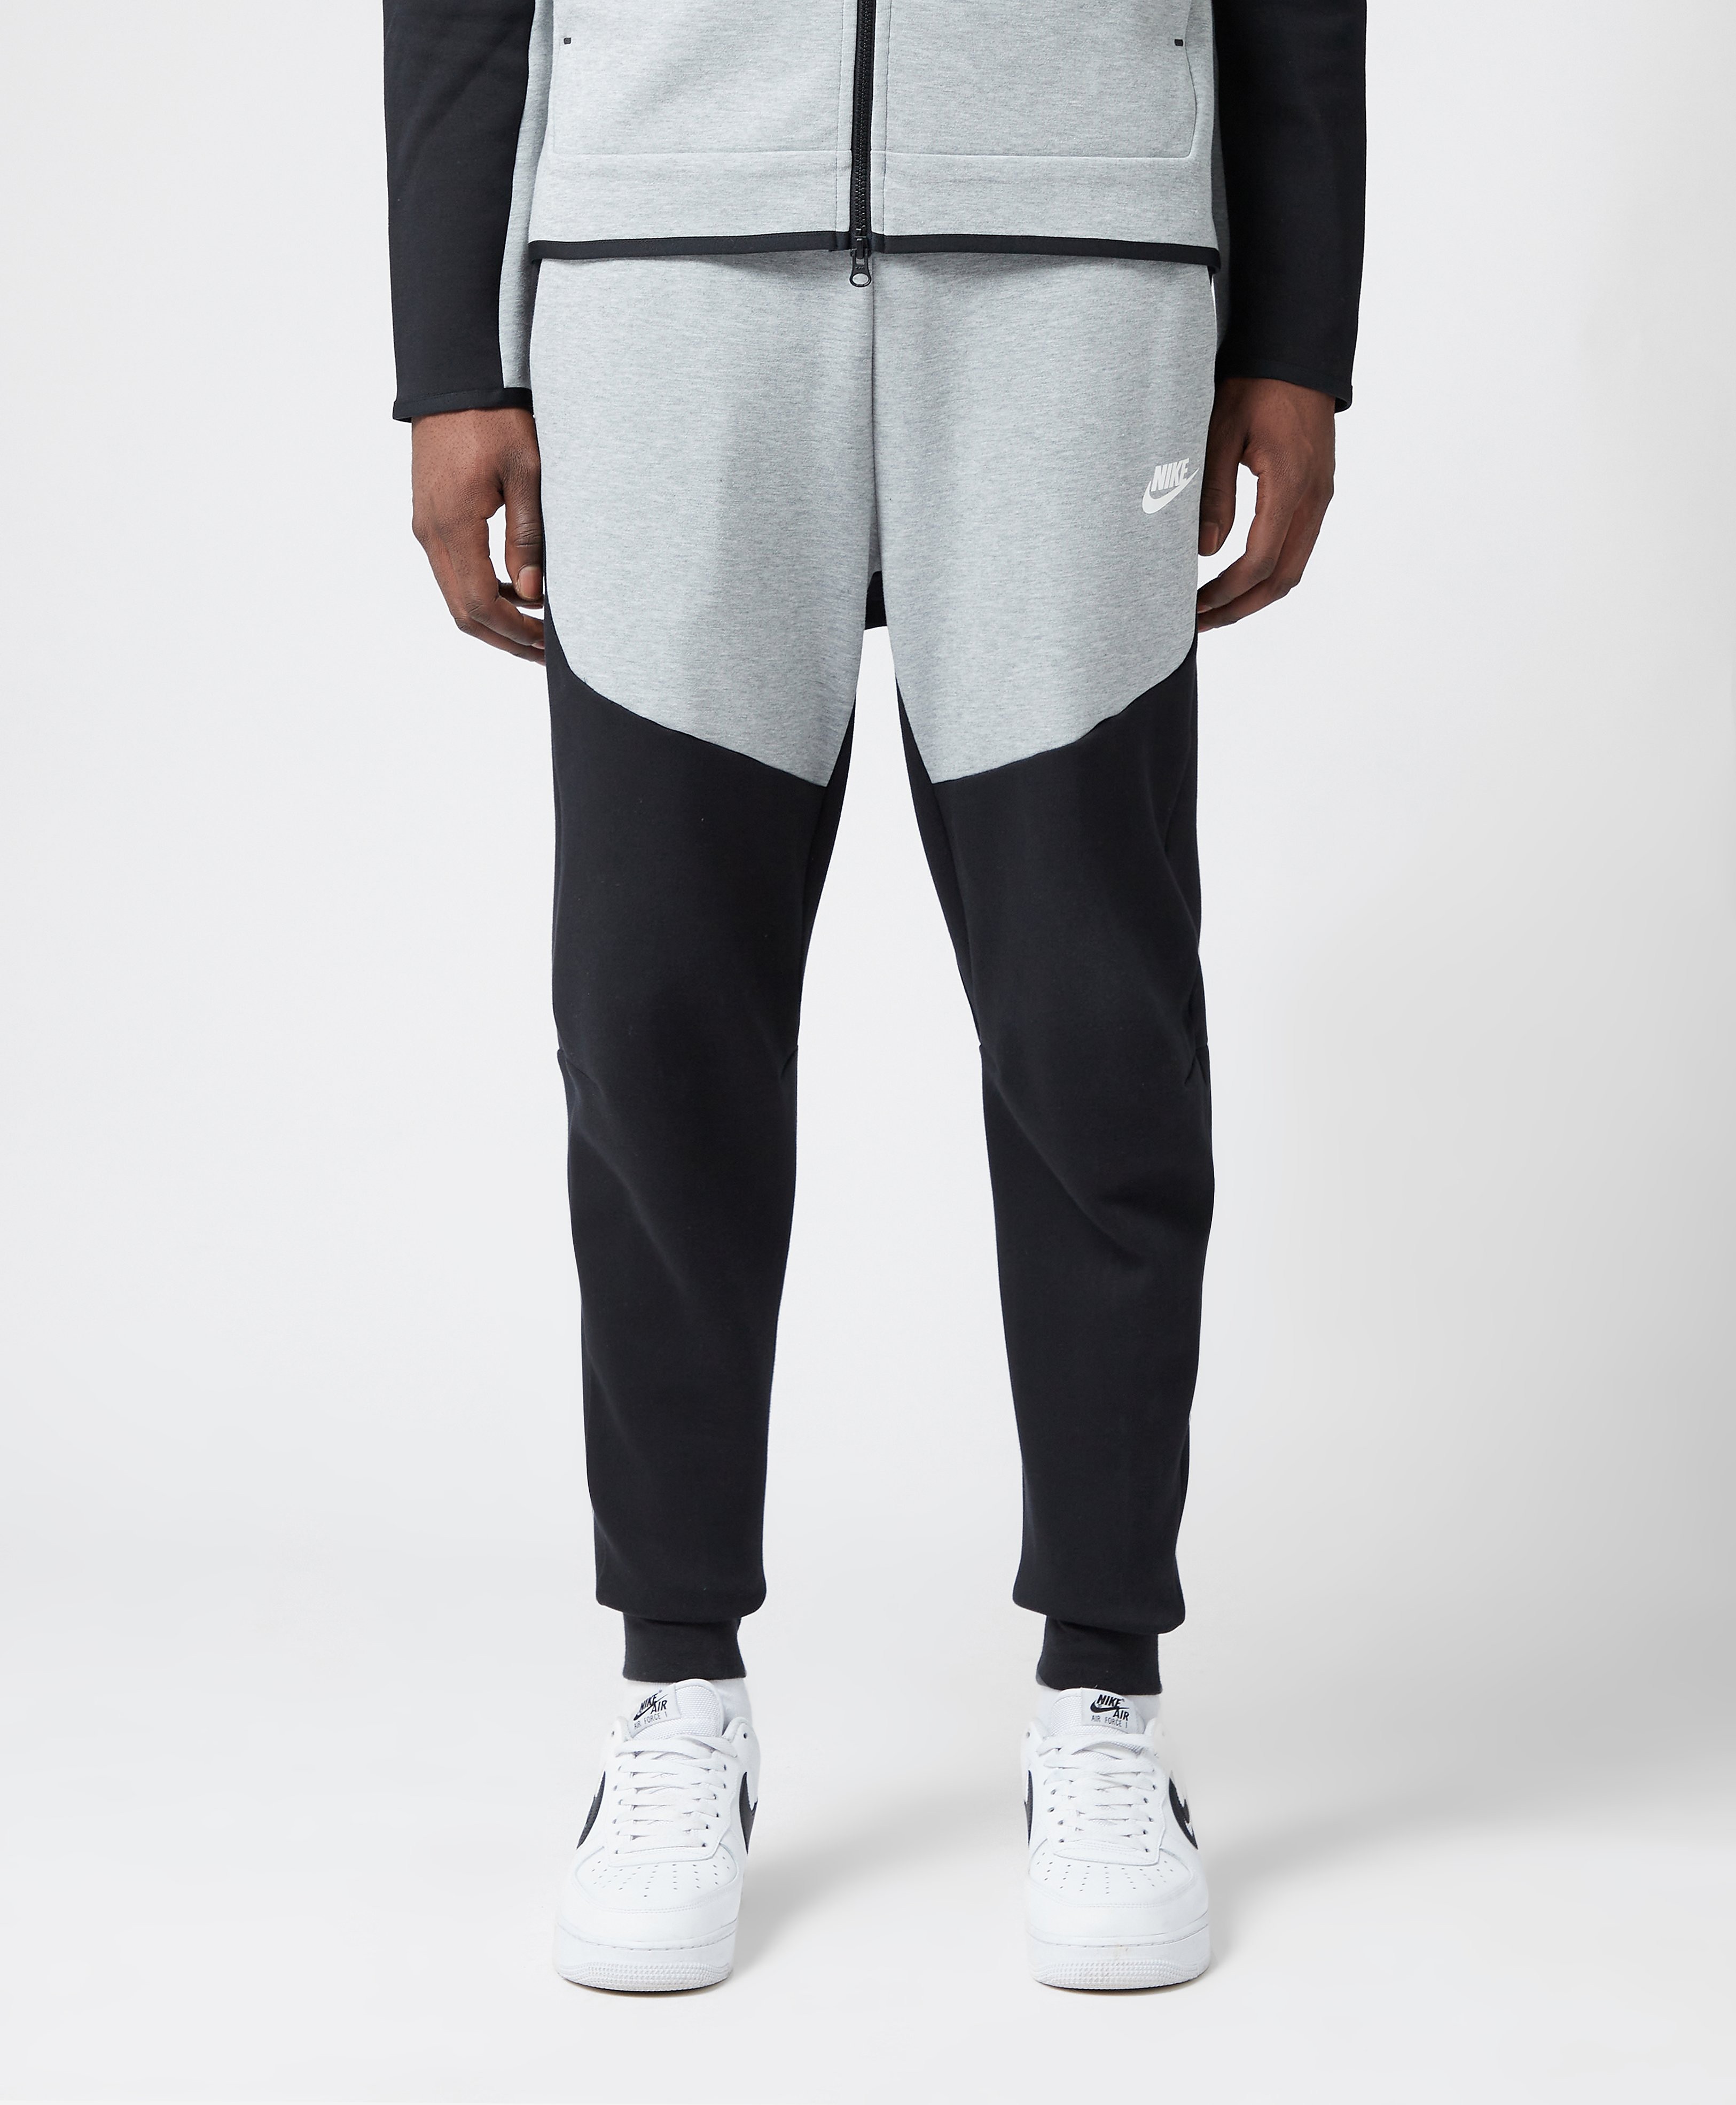 Nike Men's Tech Fleece Joggers - Black/Grey, Black/Grey